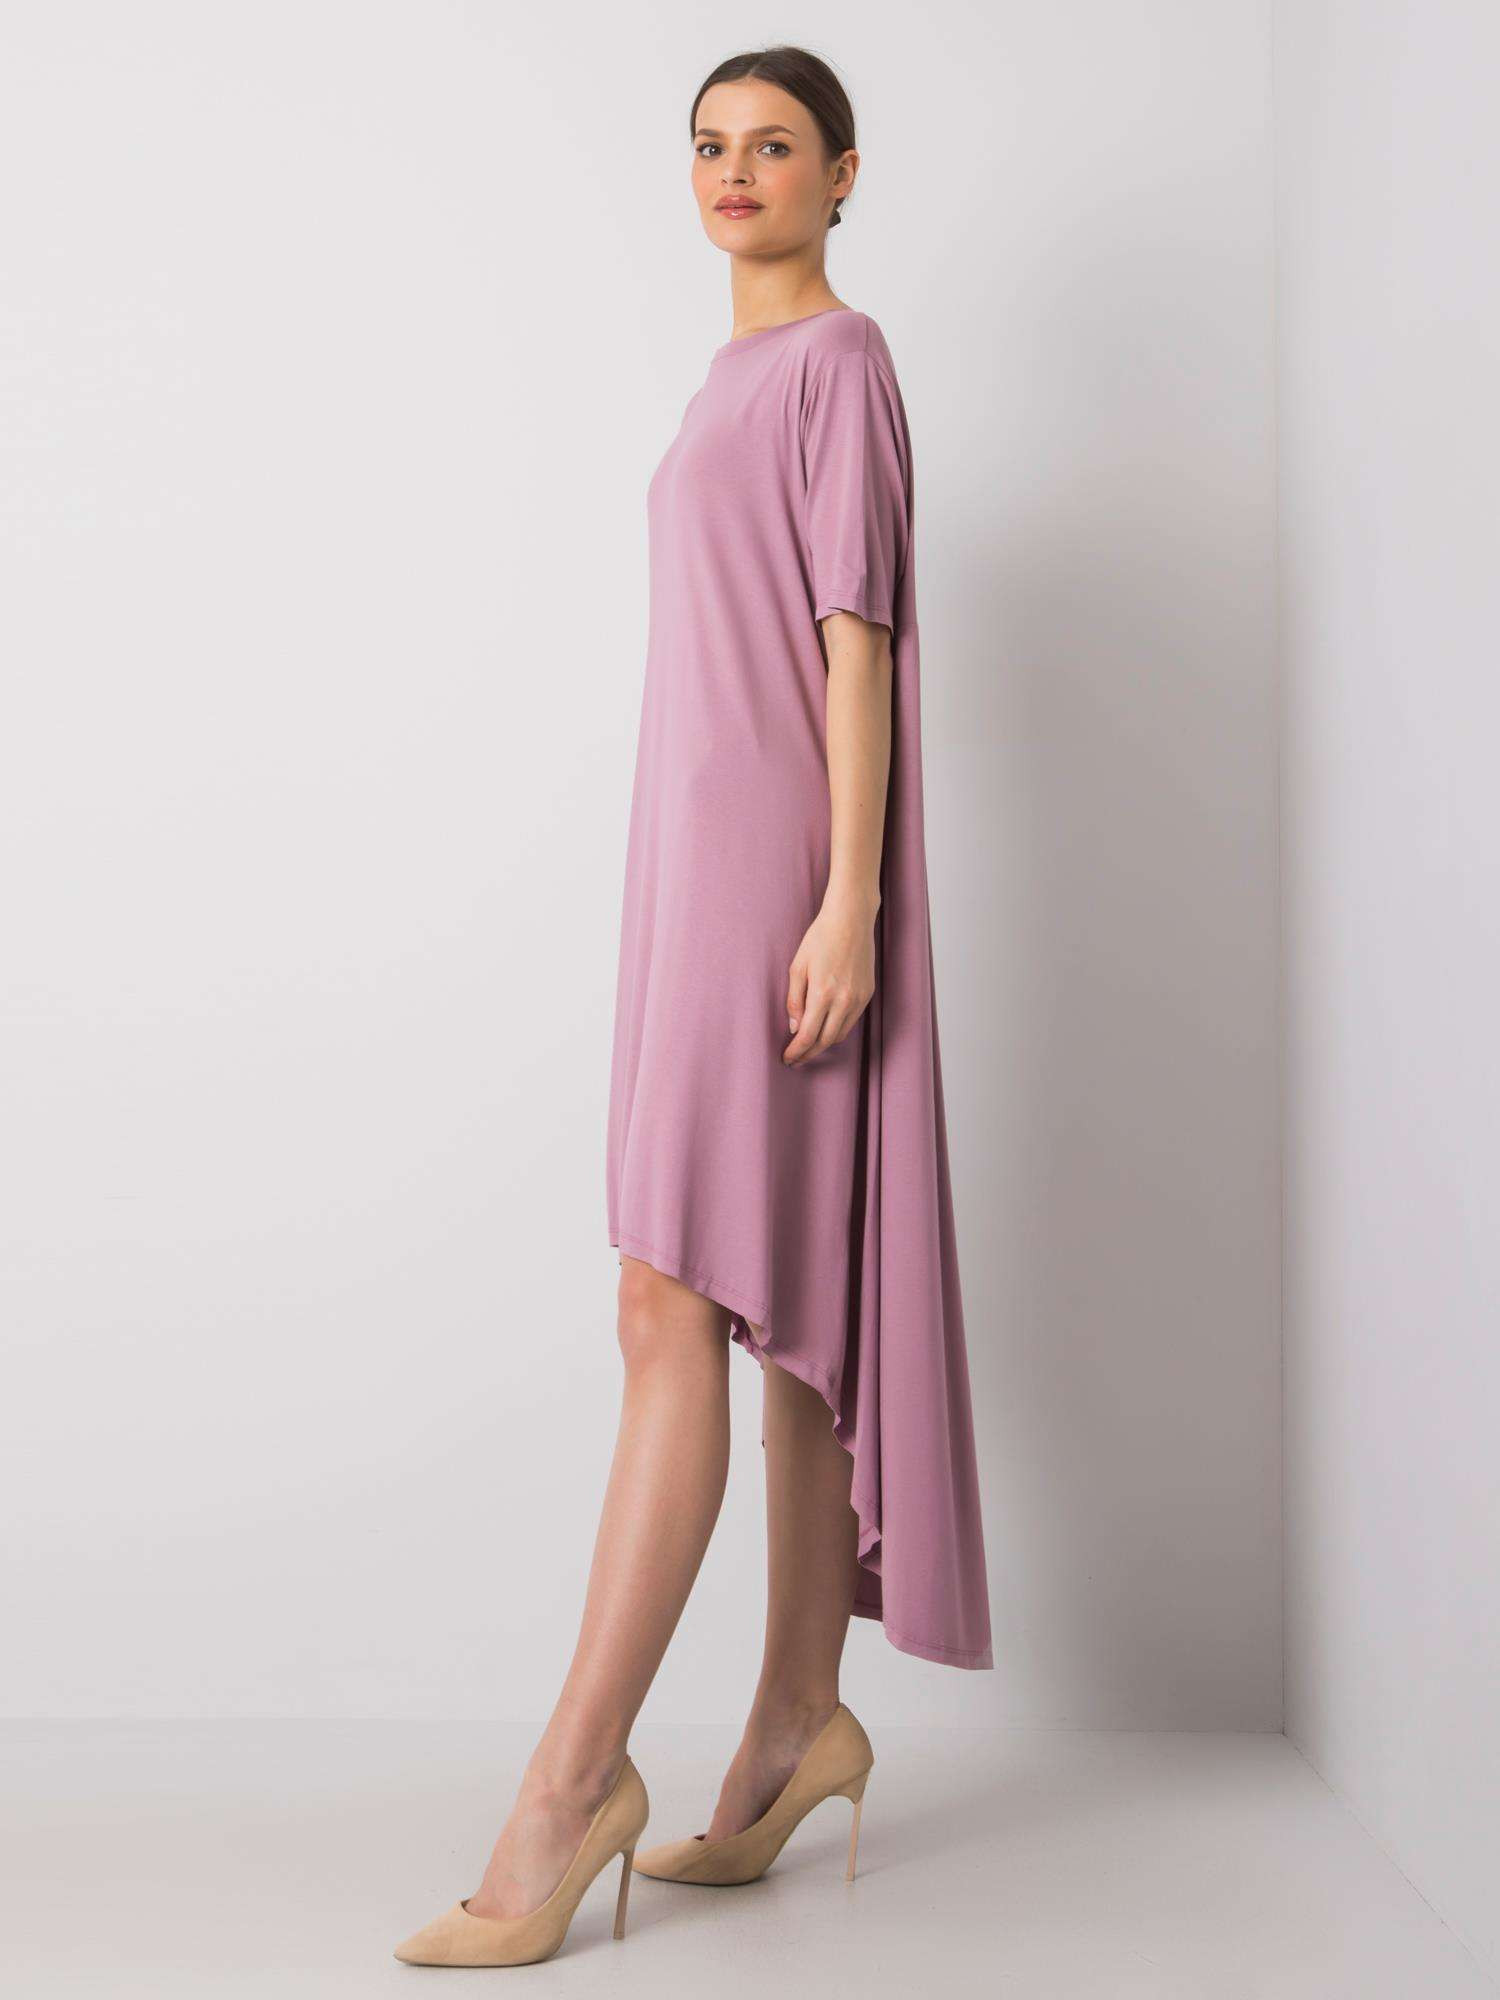 RV SK šaty model 17338795 tmavě růžová S/M - FPrice